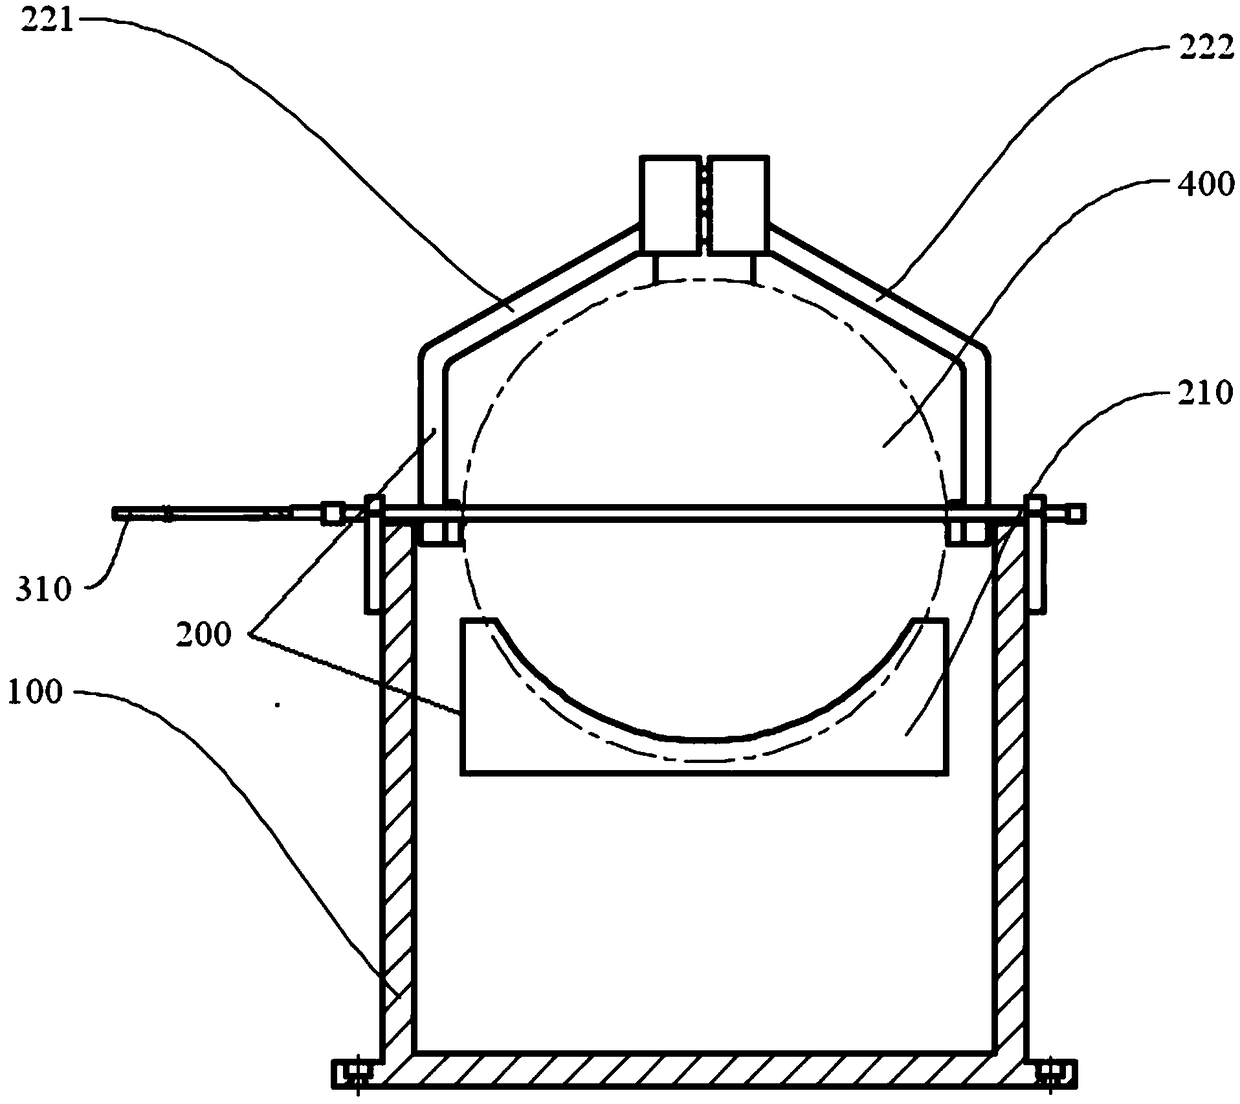 Wafer drying device and method based on Marangoni effect